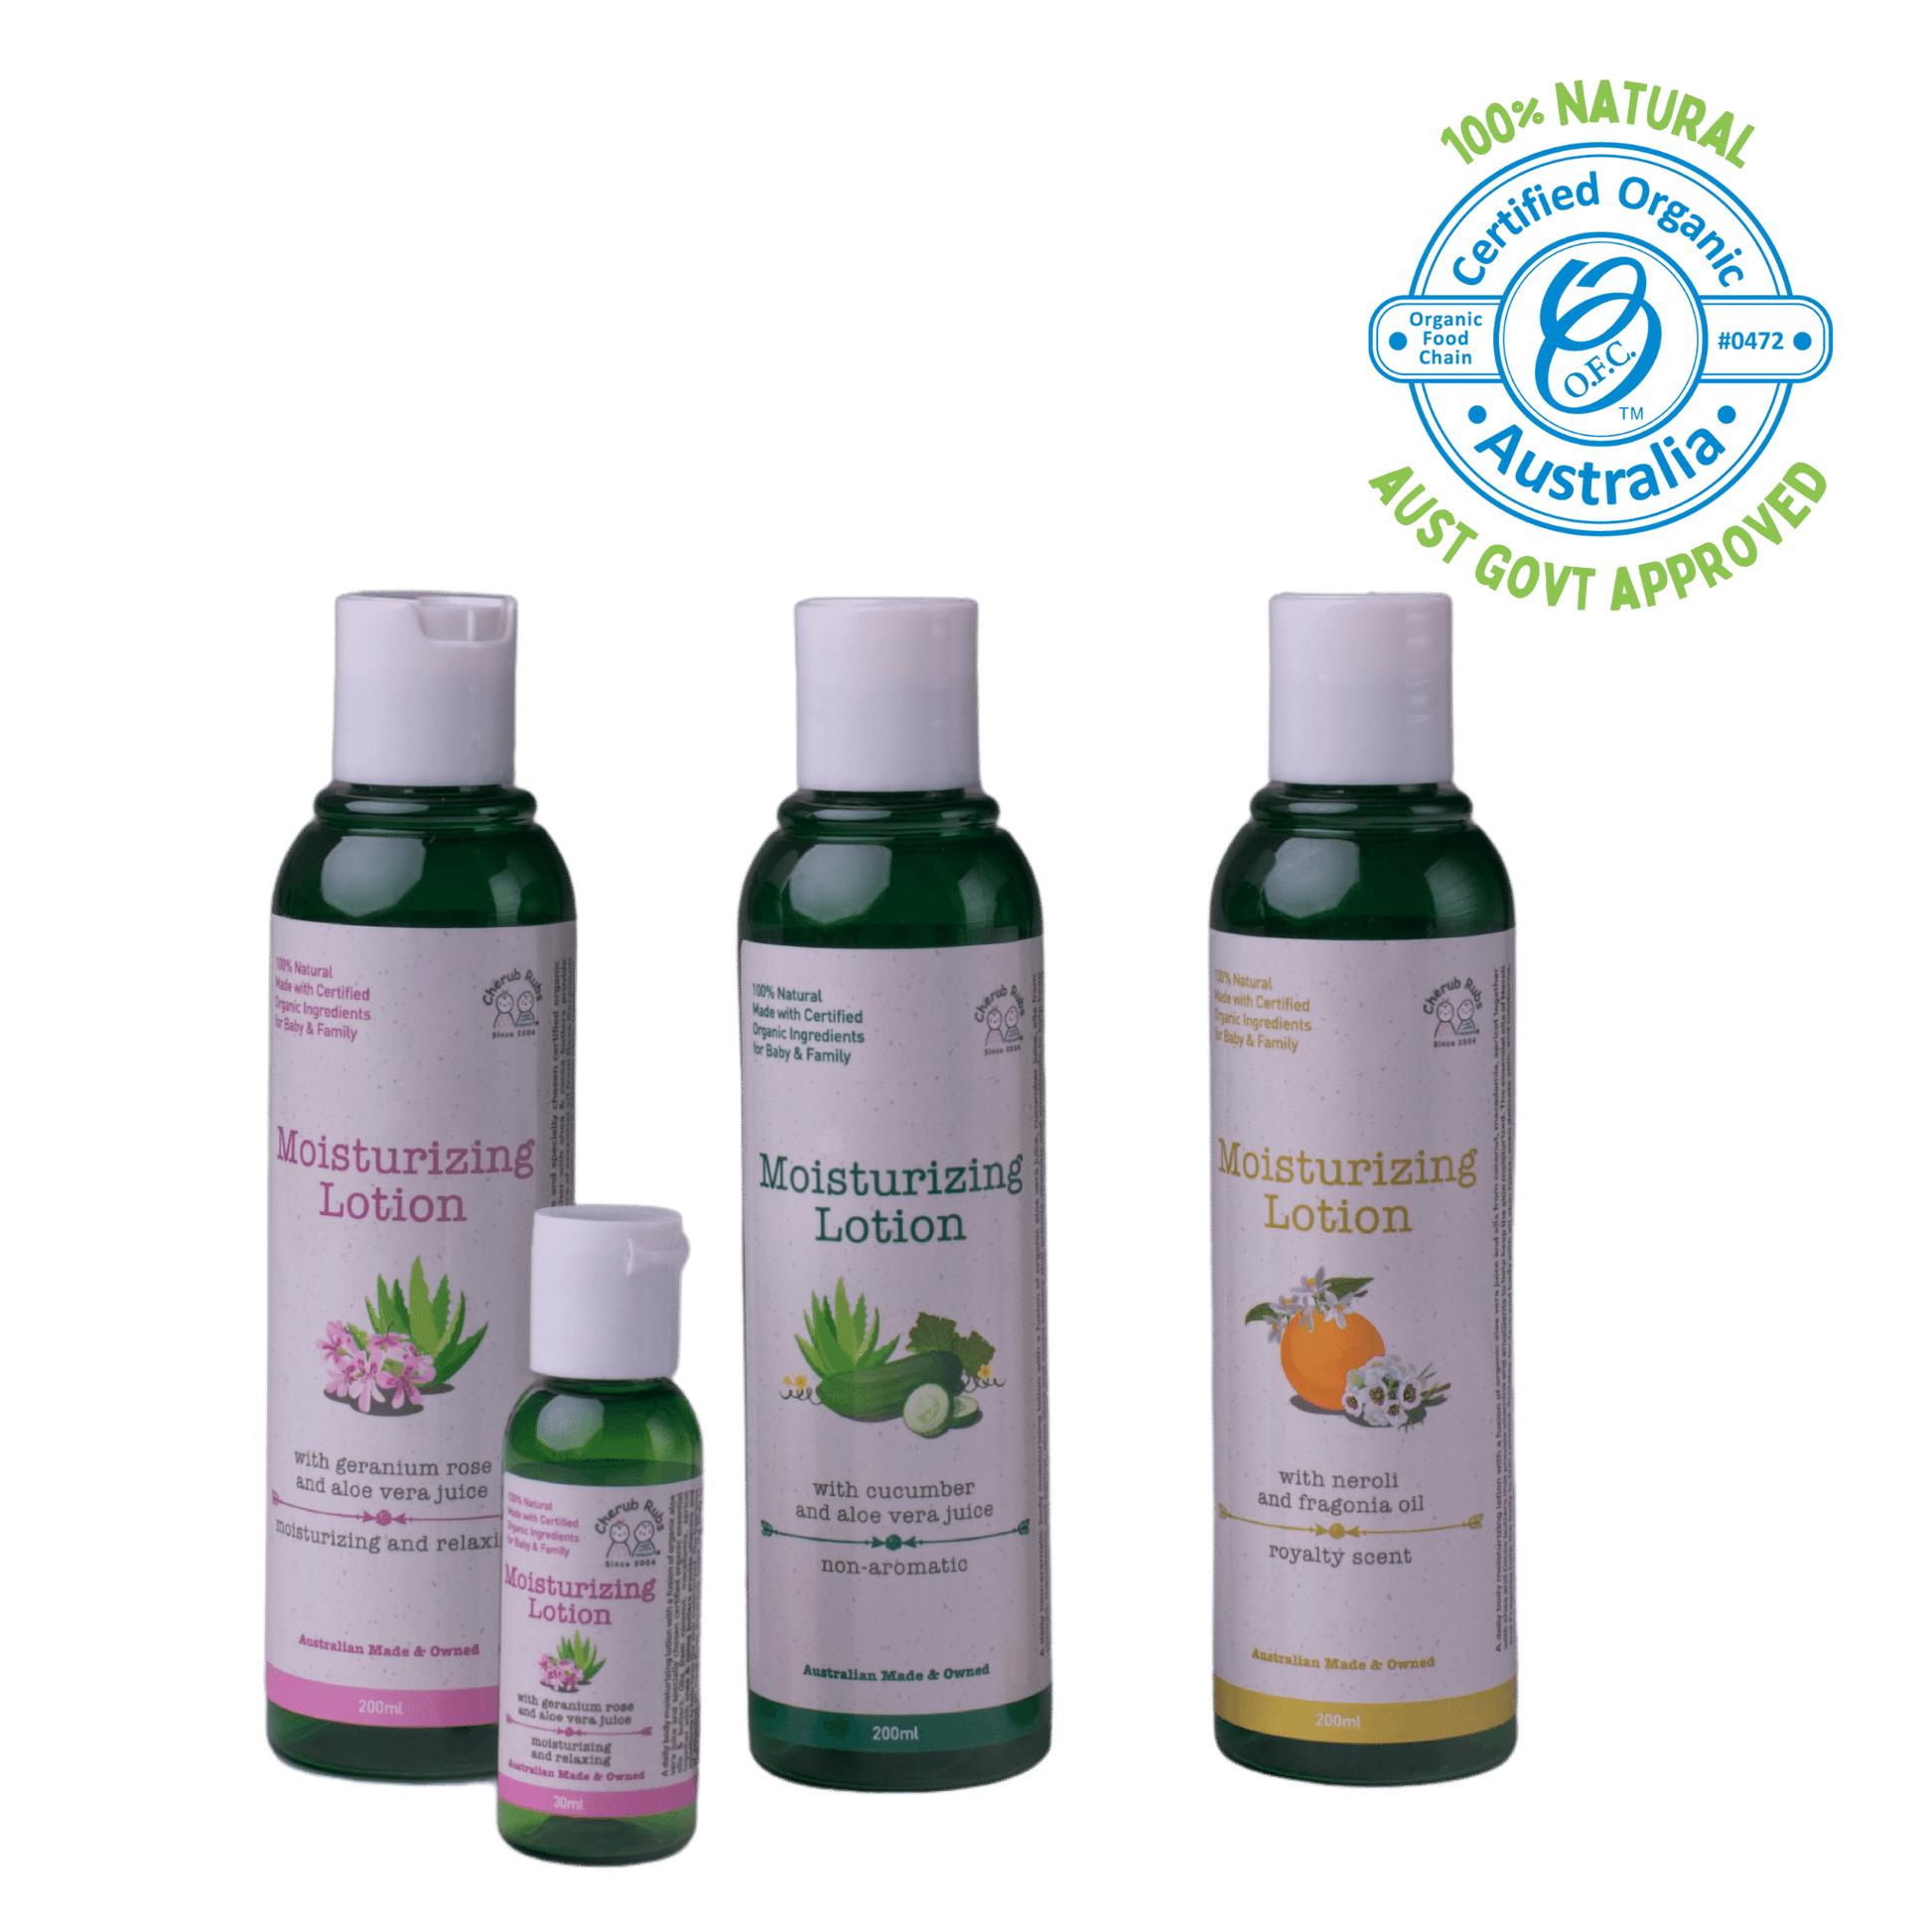 Organic moisturizing lotion by Cherub Rubs. Organic Skincare For Baby & Family by Cherub Rubs.